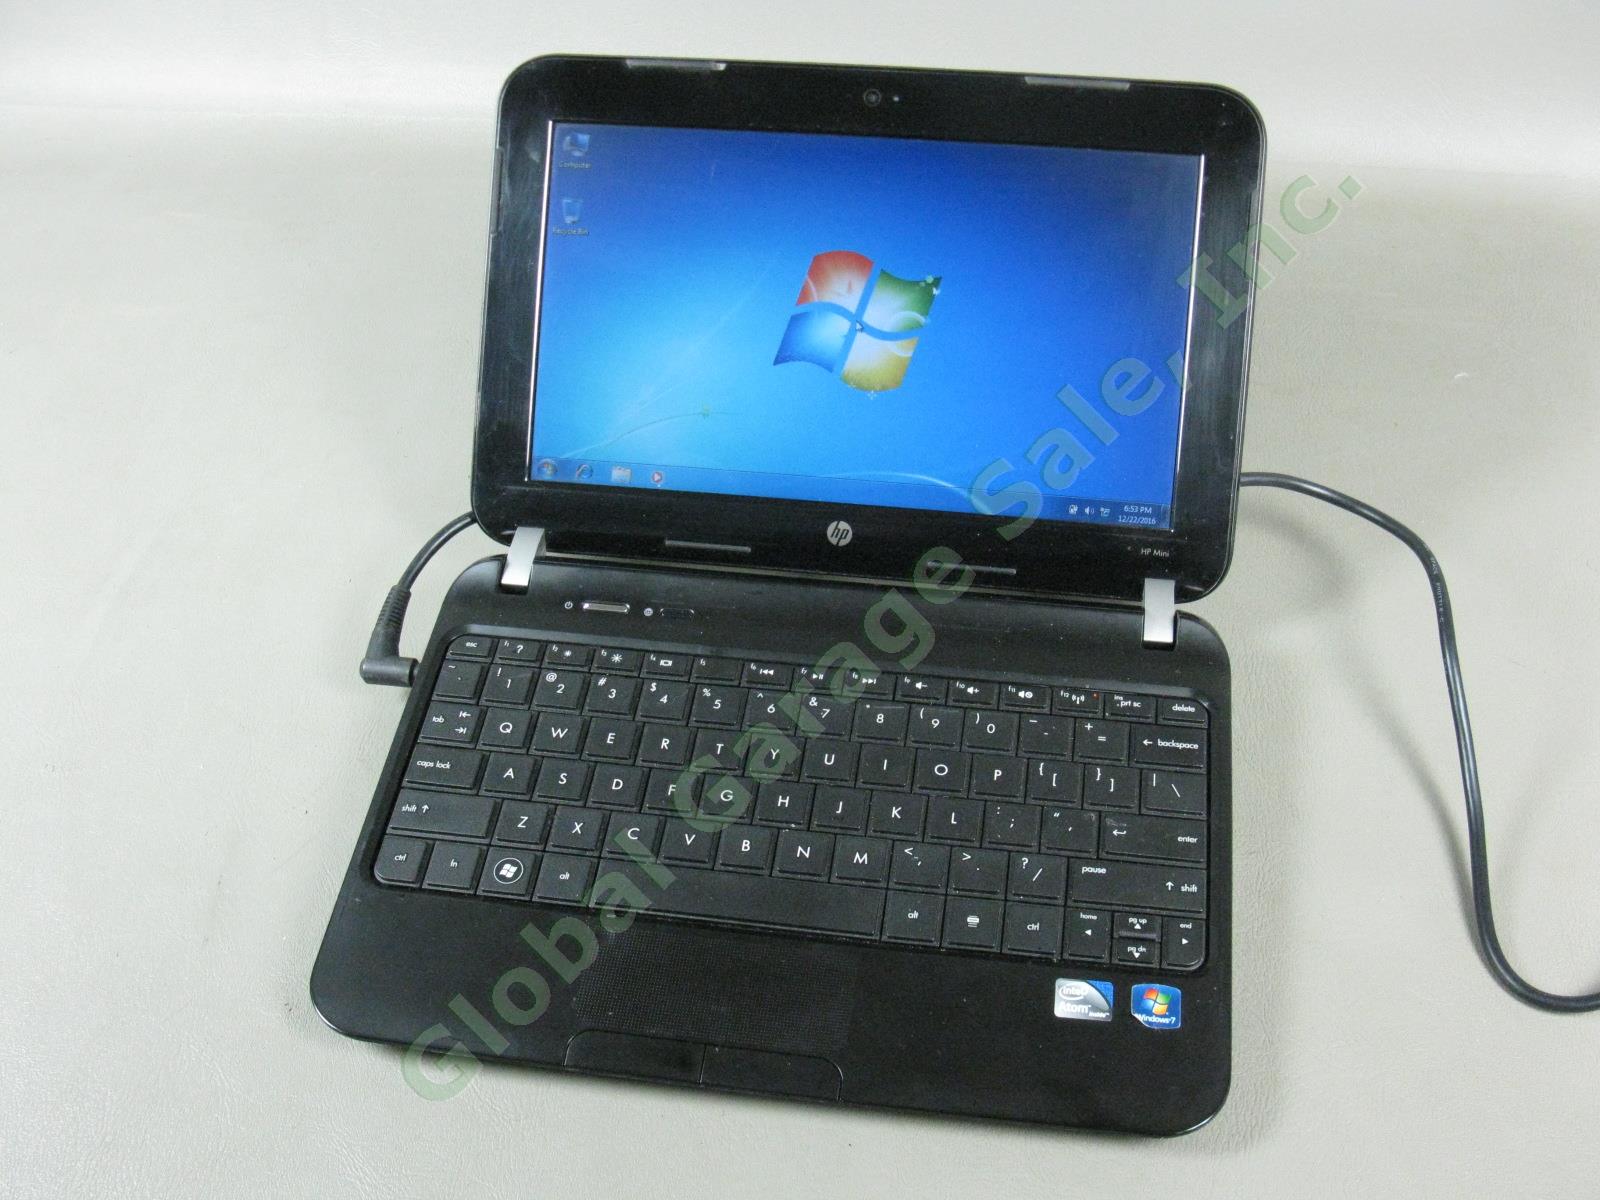 HP Mini 1104 10.1" Netbook Laptop Intel Atom N2600 1.6GHz 2GB RAM 320GB HDD Win7